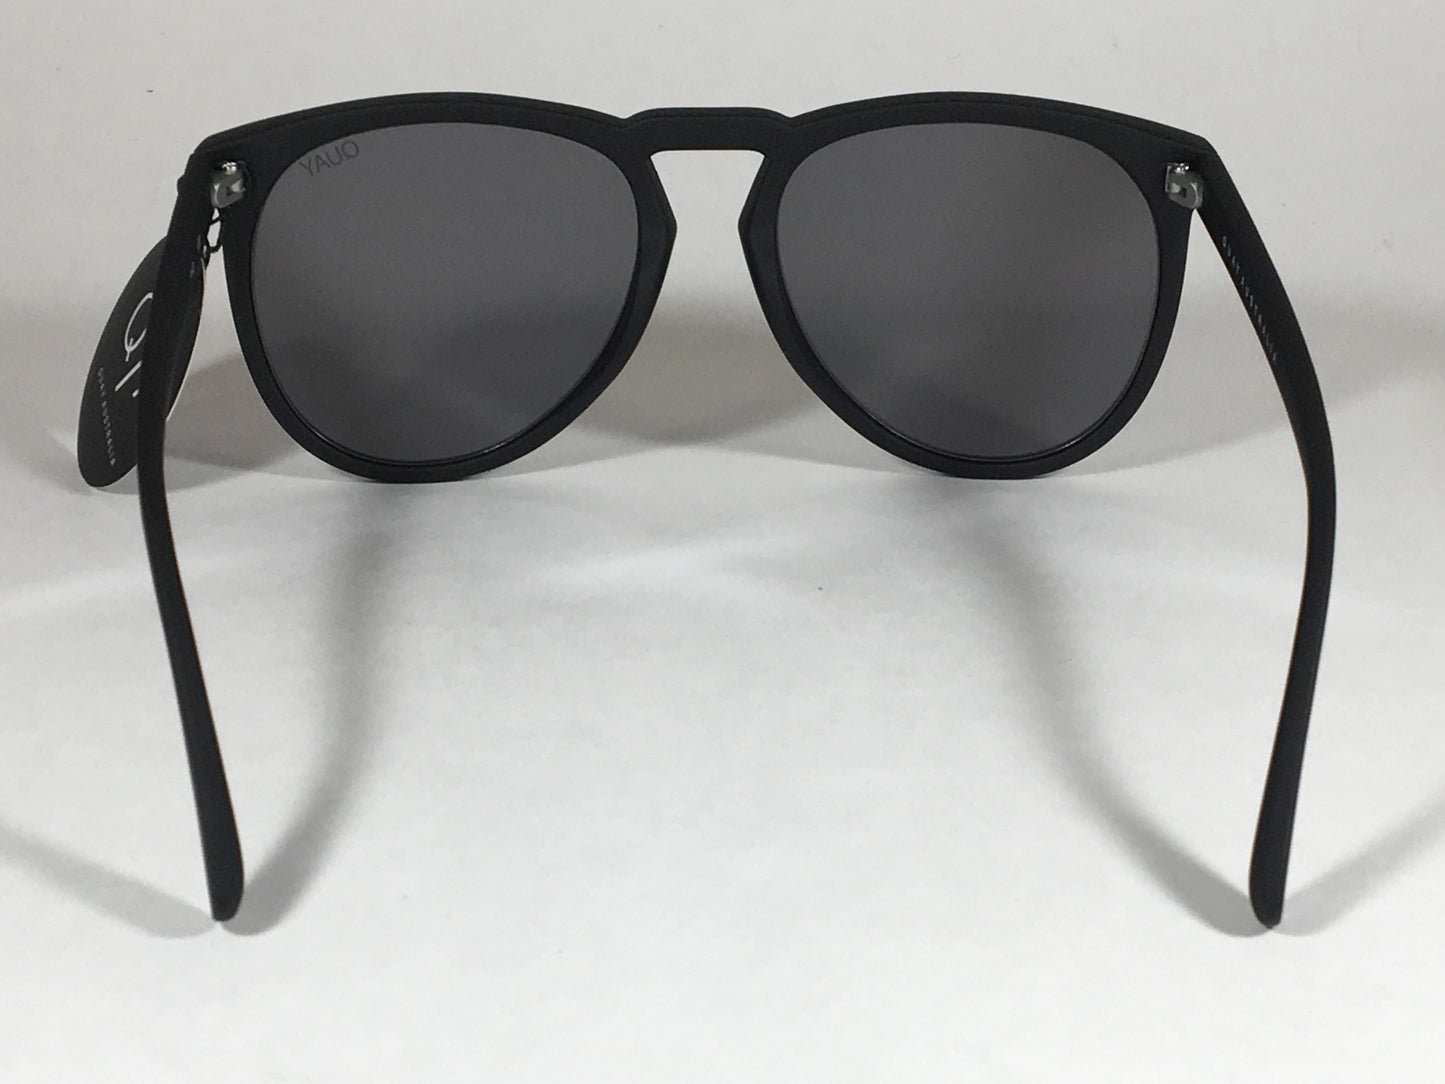 Quay Phd 122 Qm000195 Blk/slv Sunglasses Matte Black Rubber Finish Silver Mirror Lens New Unisex - Sunglasses